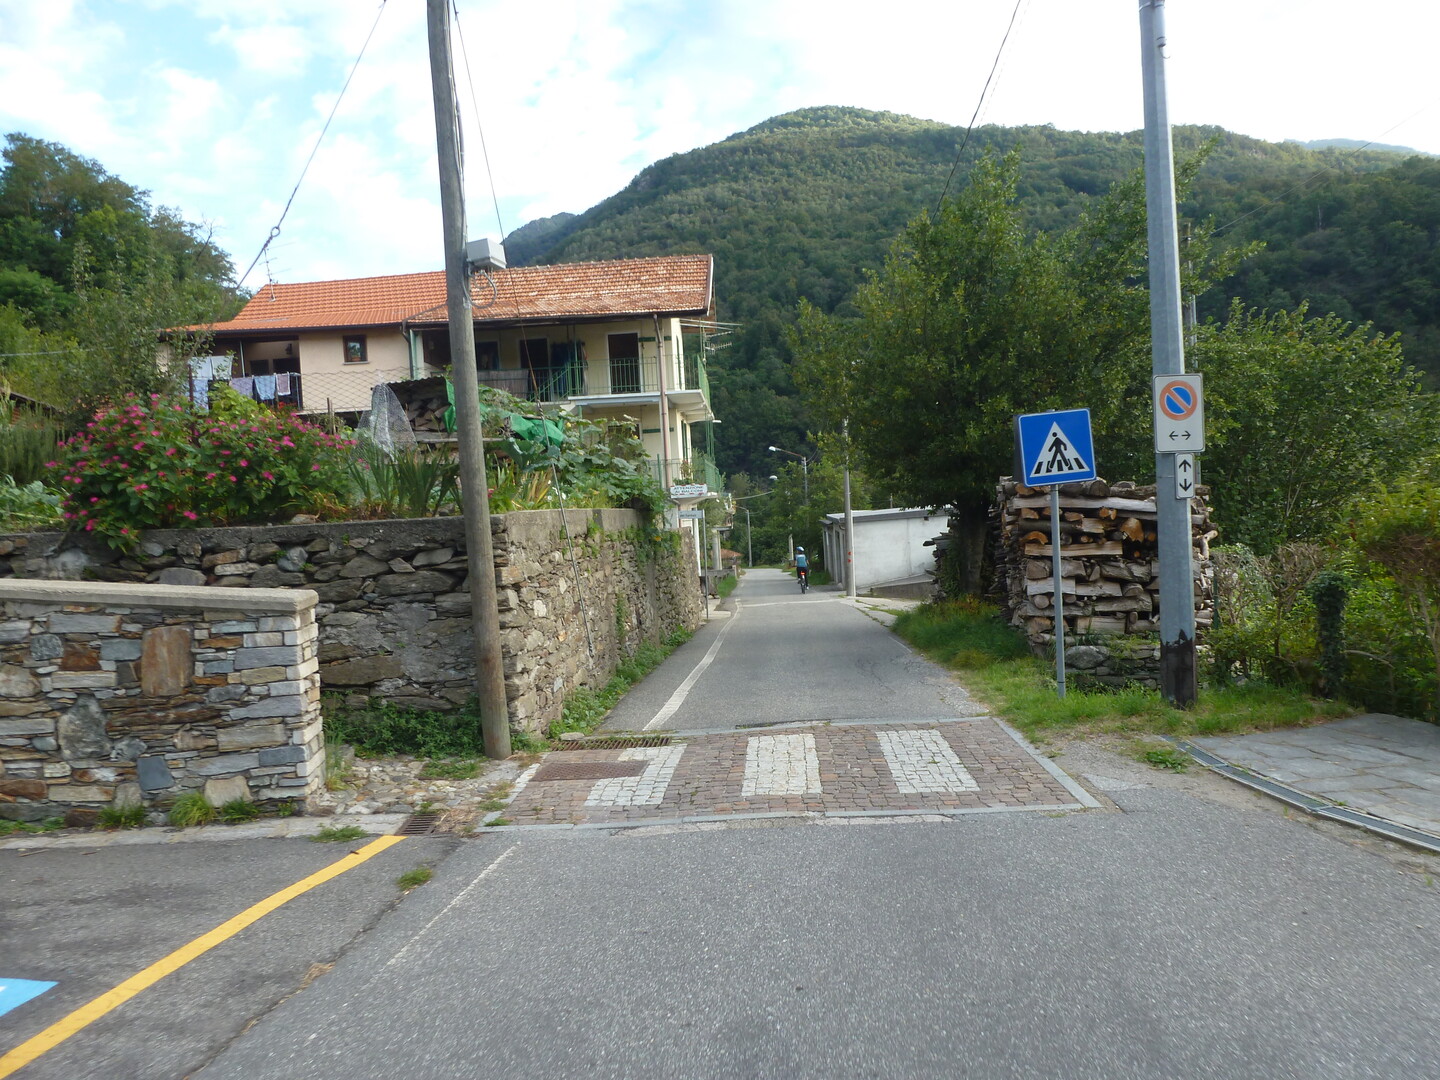 Rovegro, letztes Dorf vor den Parkeingang